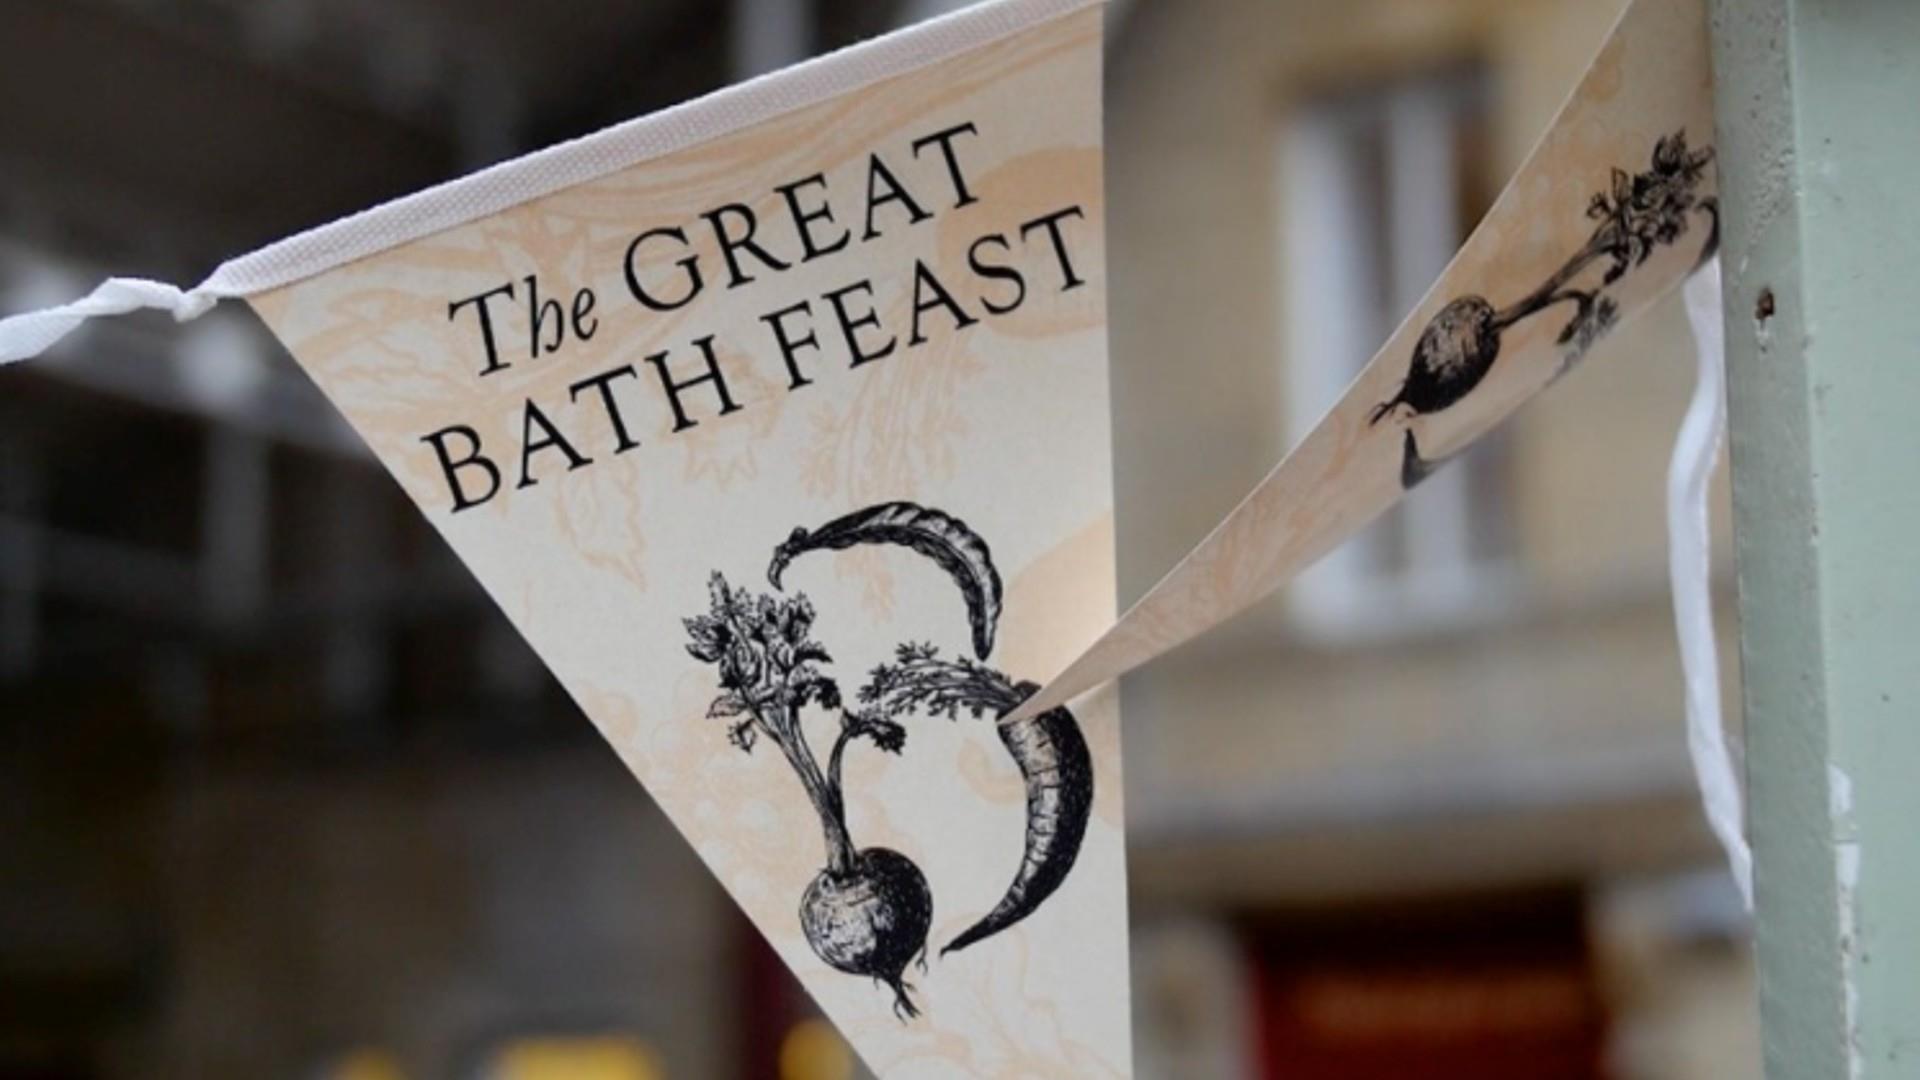 The Great Bath Feast